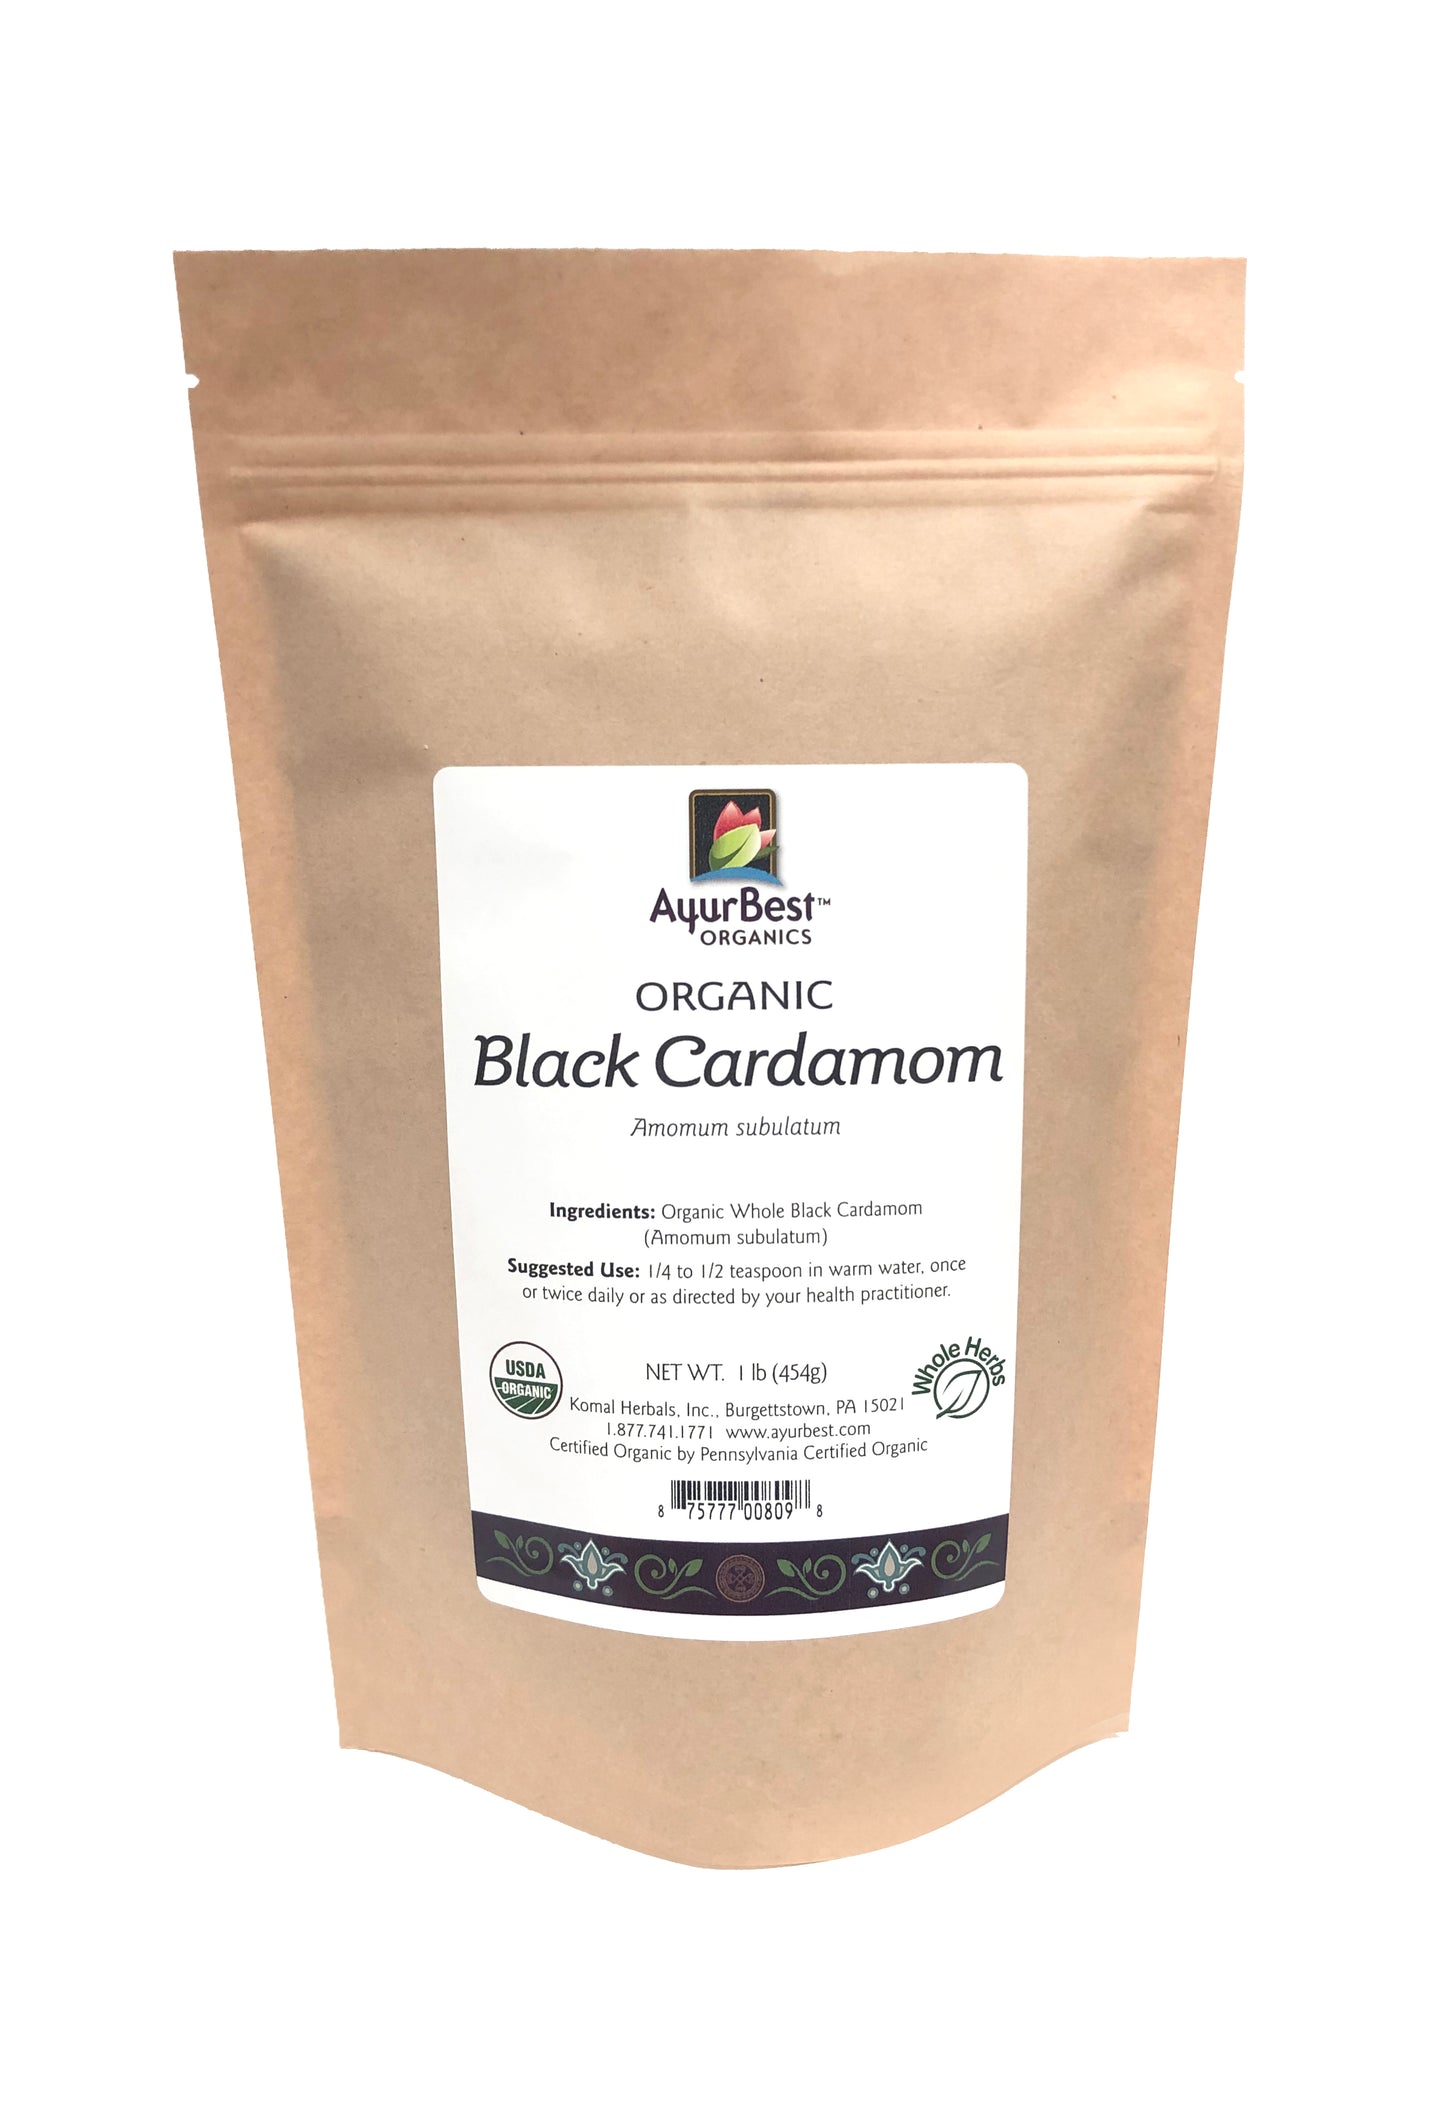 Organic Black Cardamom Whole